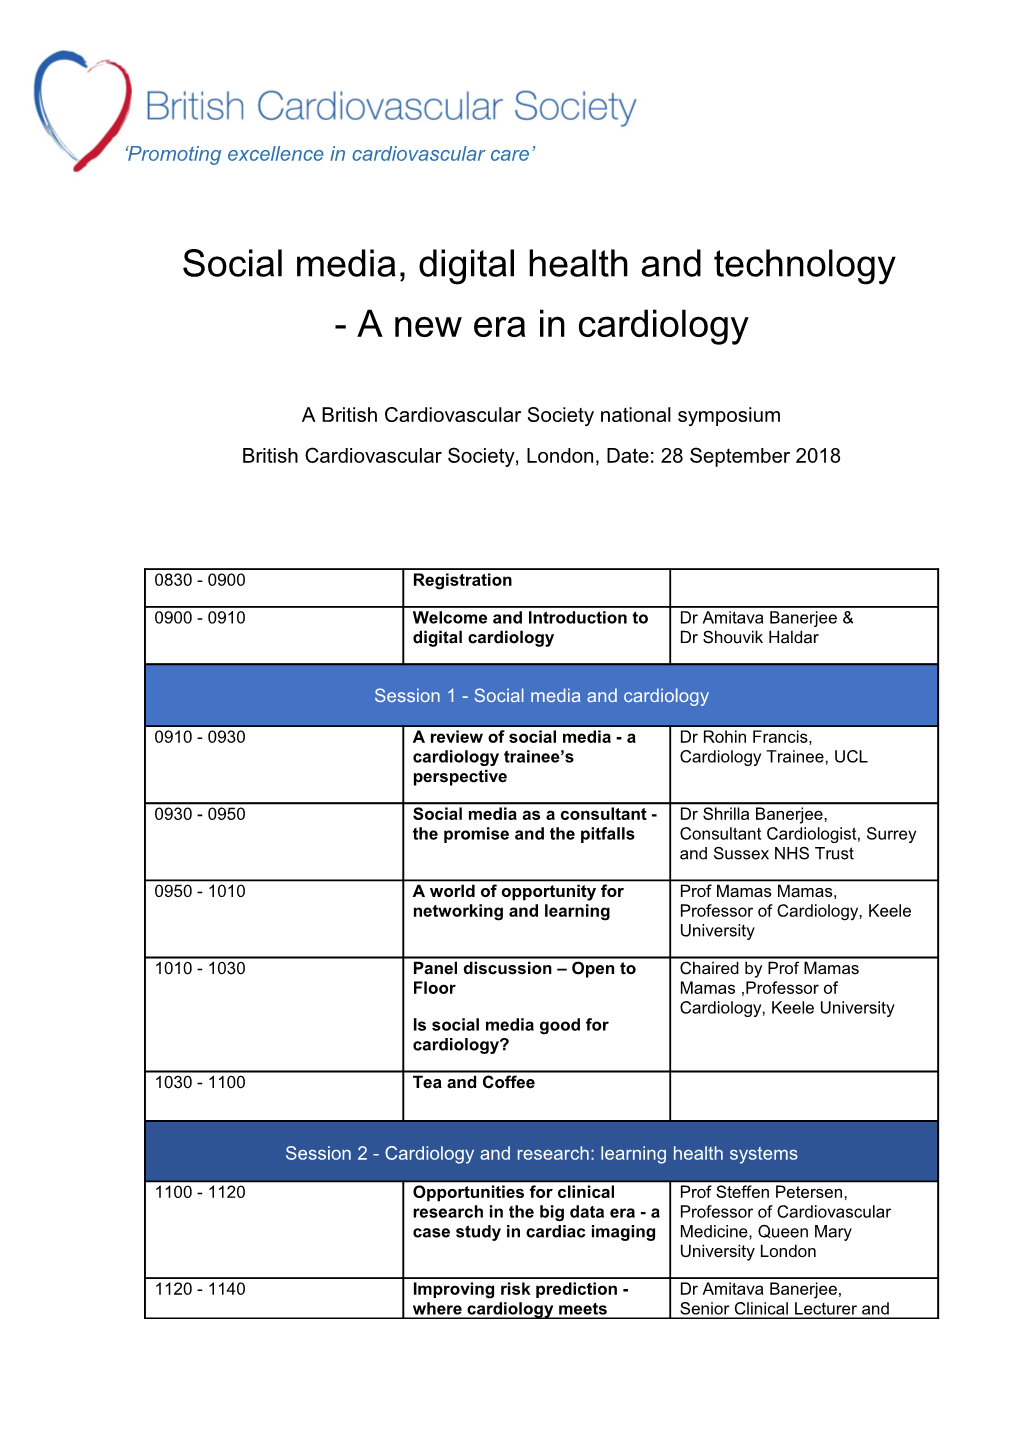 Social Media, Digital Health and Technology